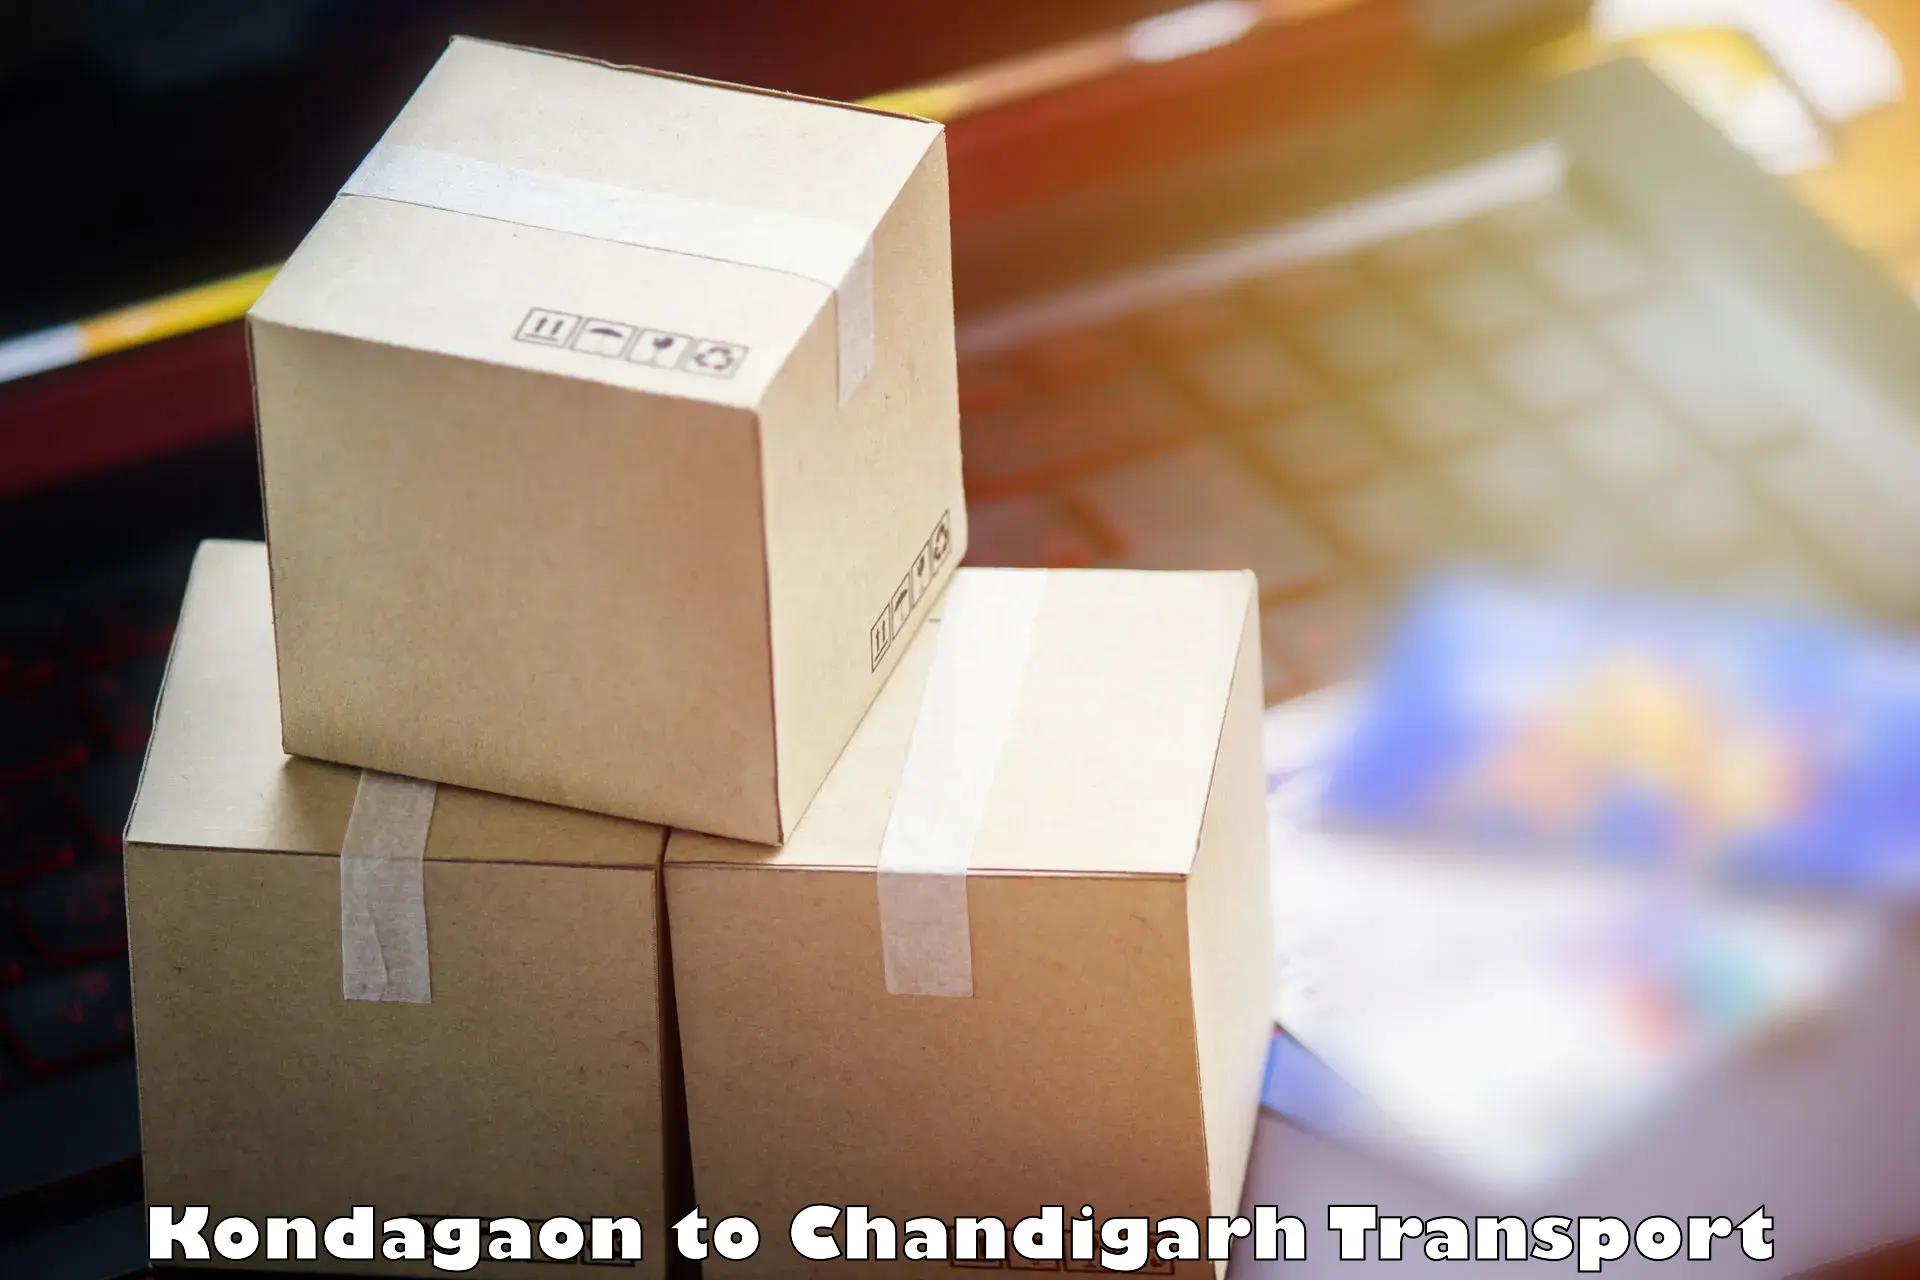 Shipping partner Kondagaon to Chandigarh